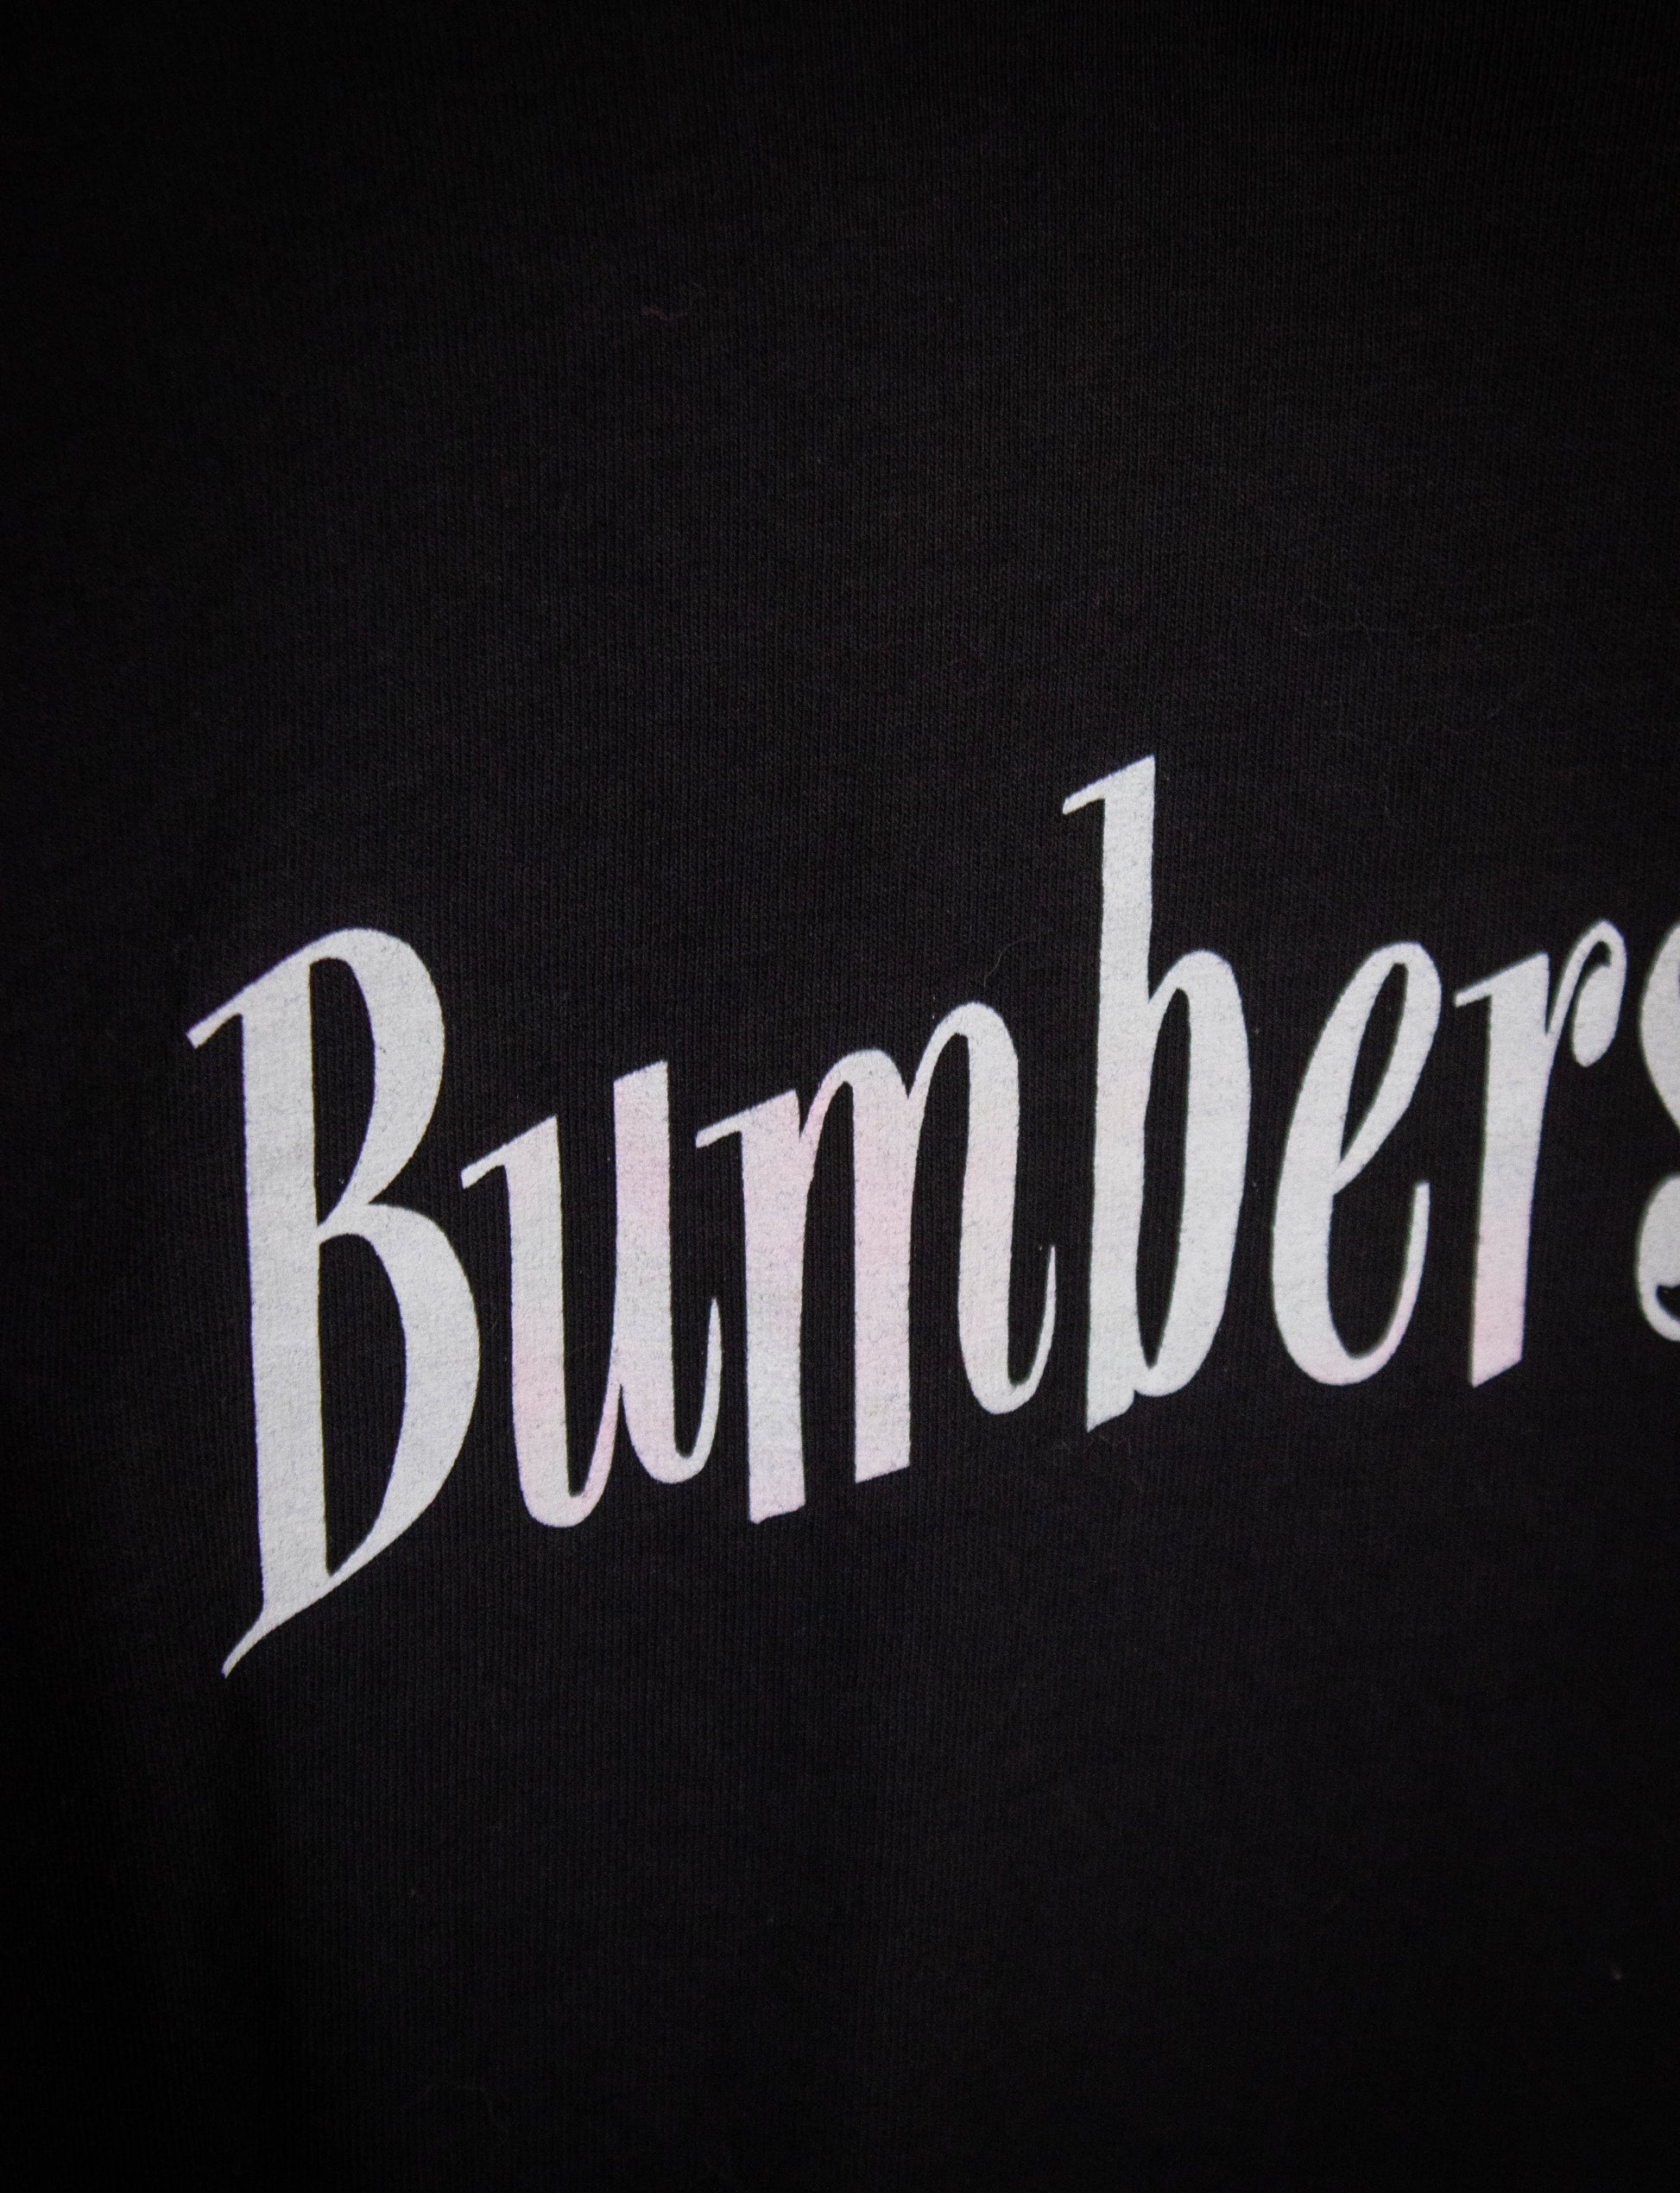 Vintage Bumbershoot Festival Concert T Shirt 1996 Black XL